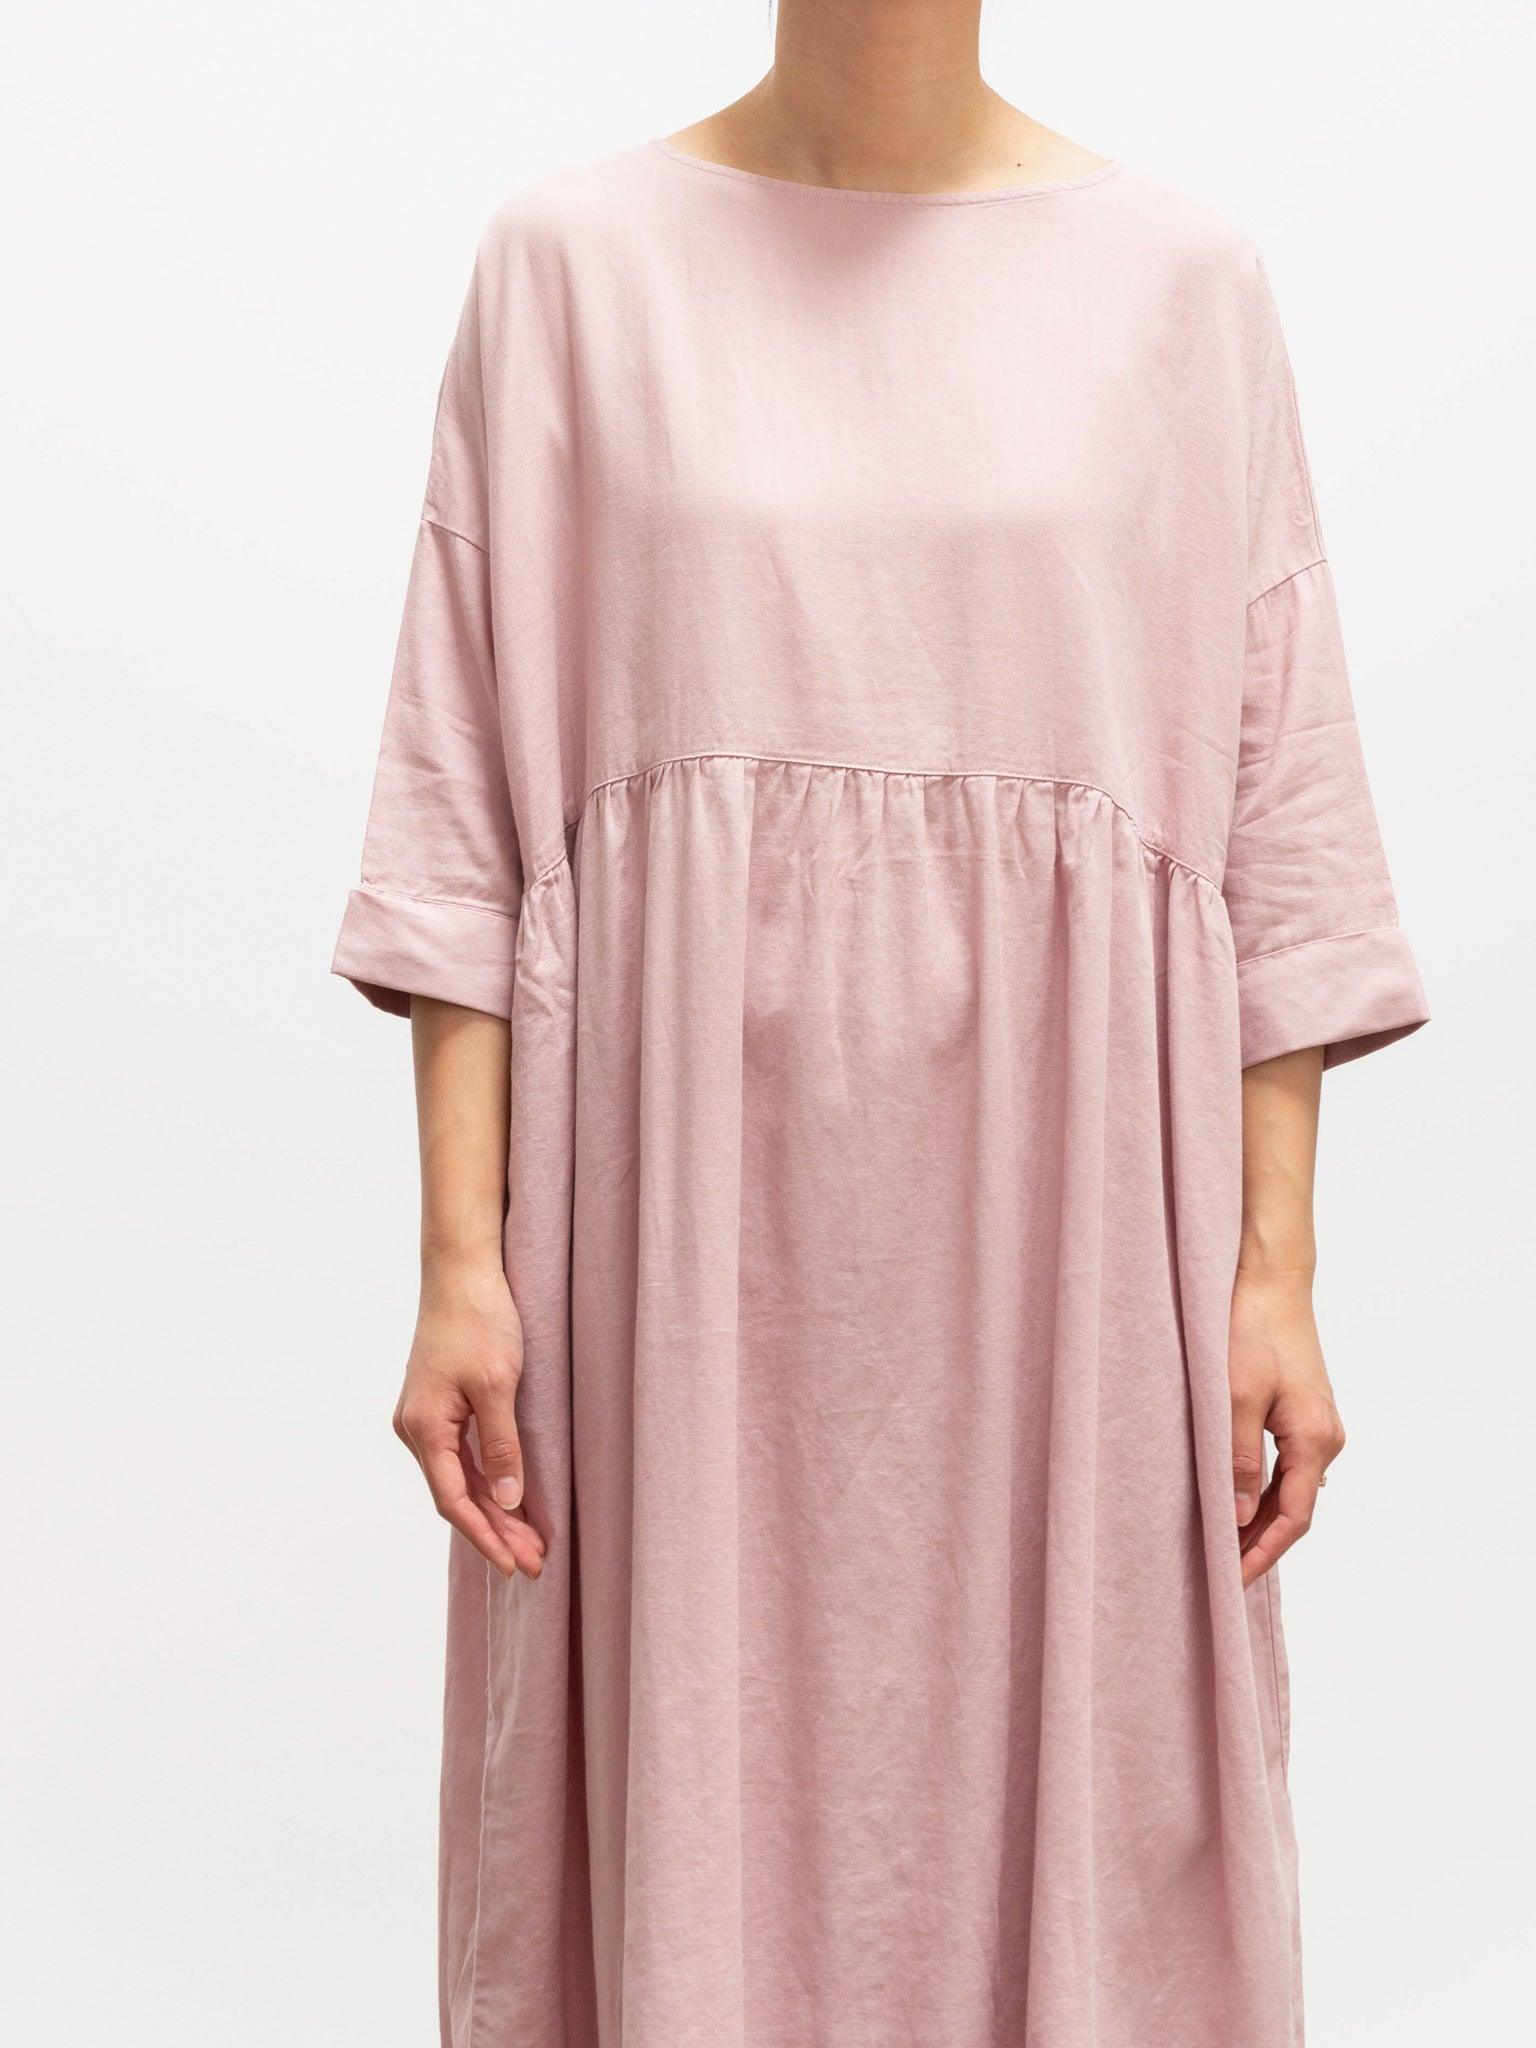 Namu Shop - Ichi Antiquites Co/Li Gather Dress - Light Pink